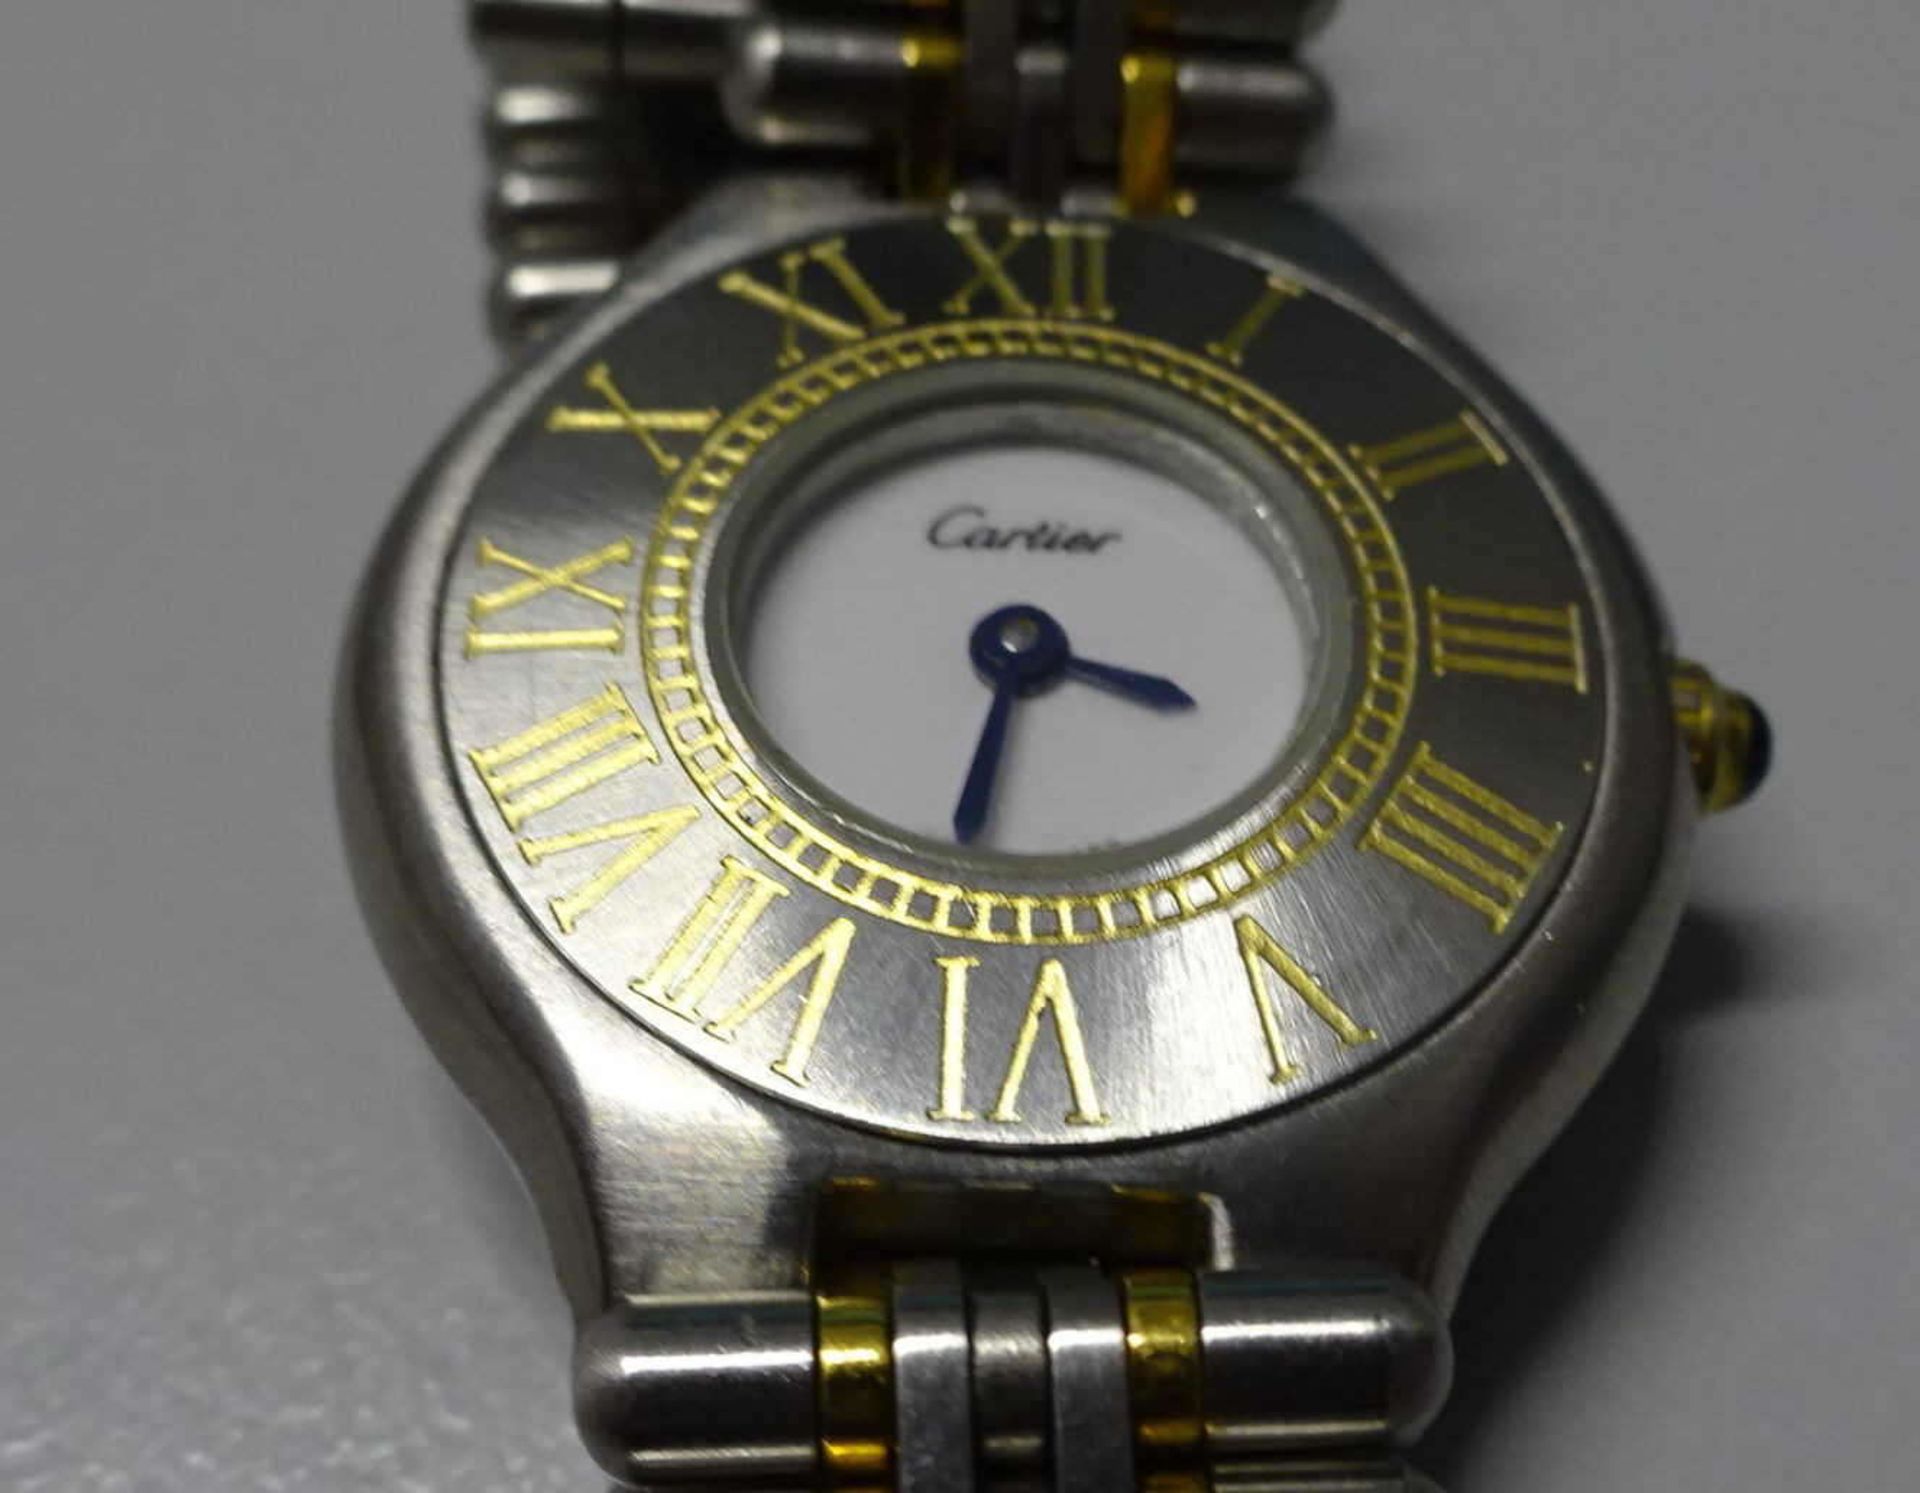 Damen Cartier "Must de Cartier", Ladies watch, 925er Silber, teilweisen vergoldet. Mit Stahlarmband. - Image 2 of 3